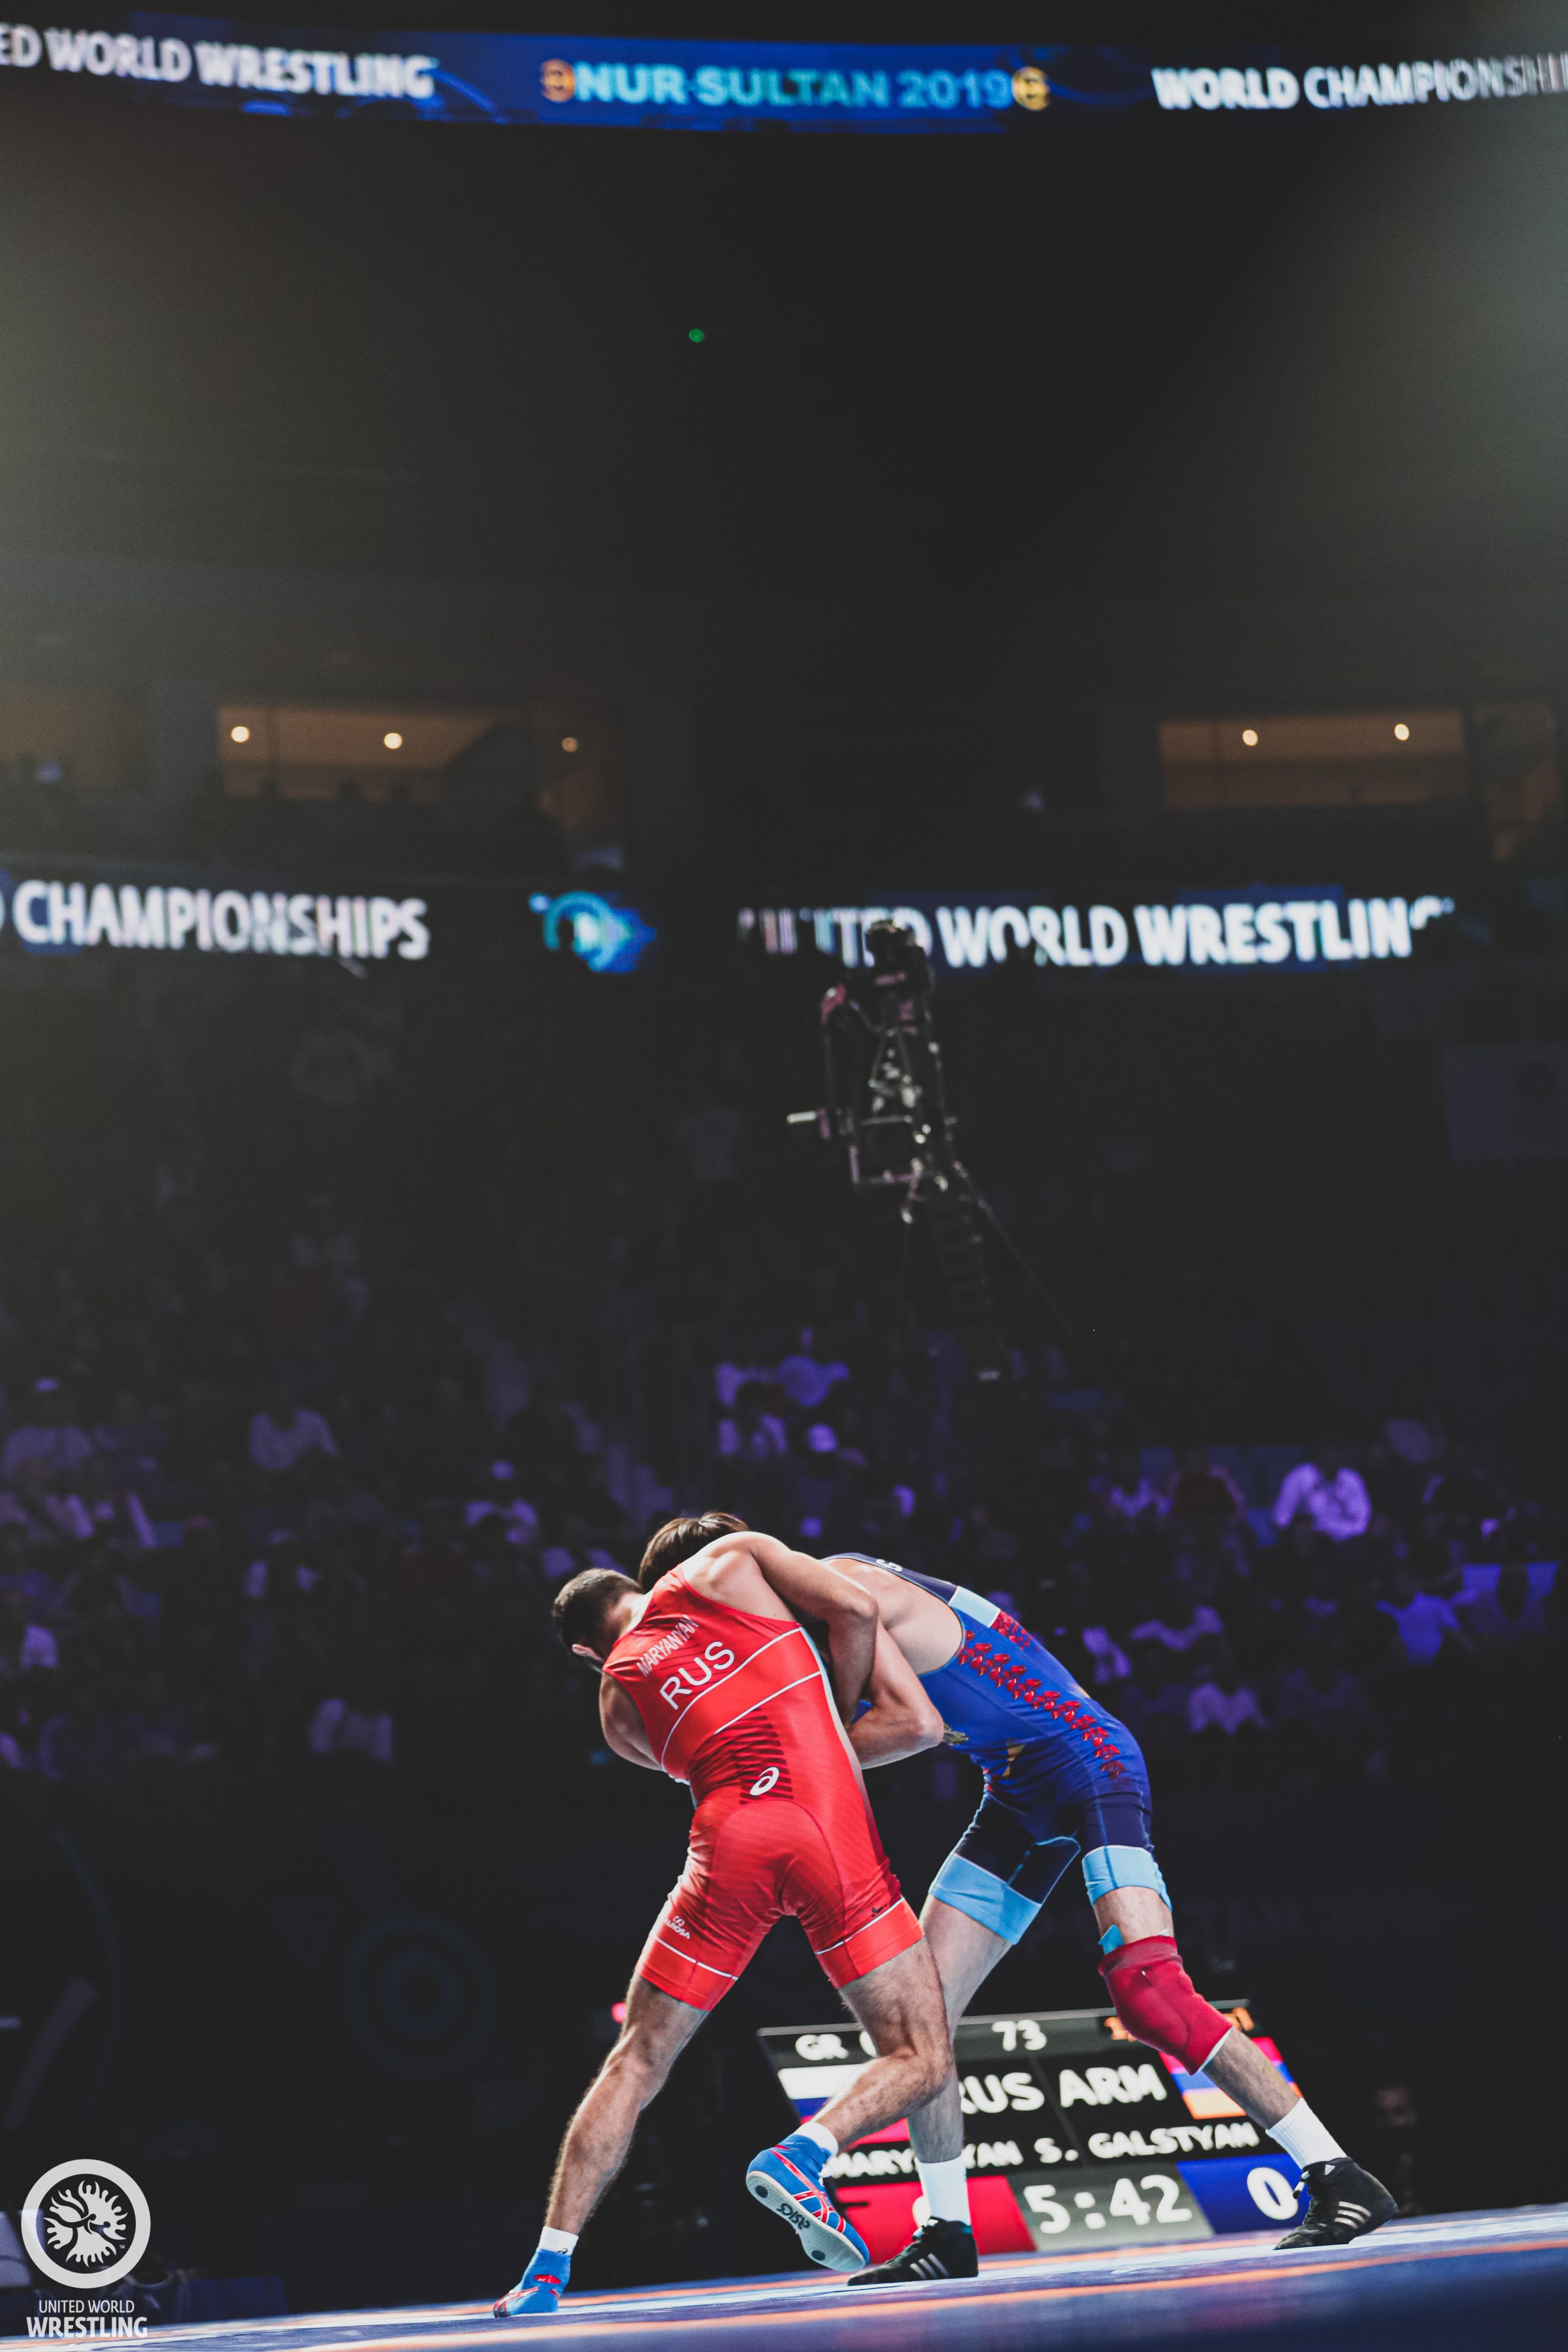 World Championships. Olympic wrestling, World championship, Wrestling